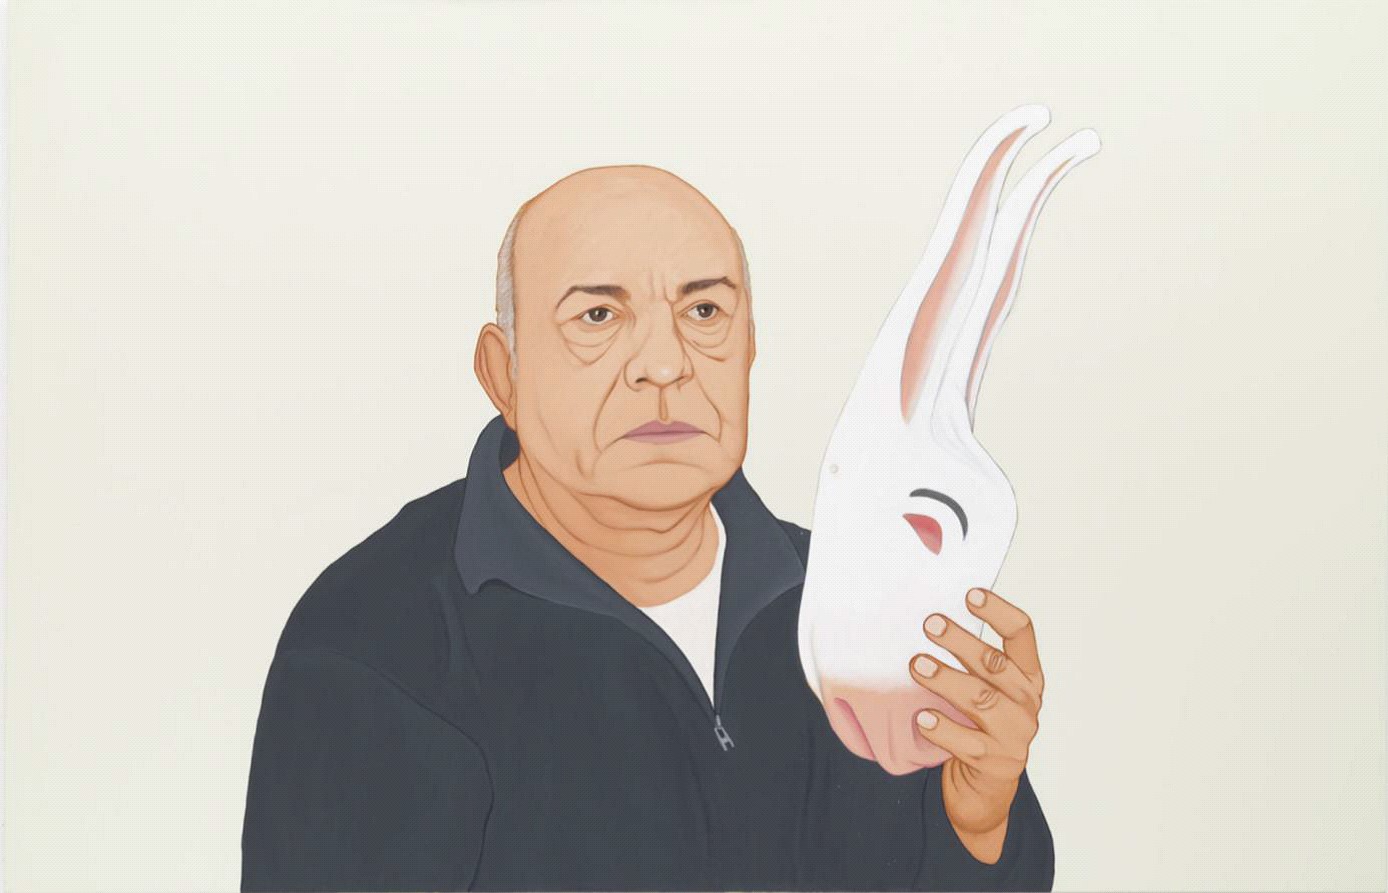 "Face off". 2010. Oil and acrylic on canvas. 165 x 254 cm.